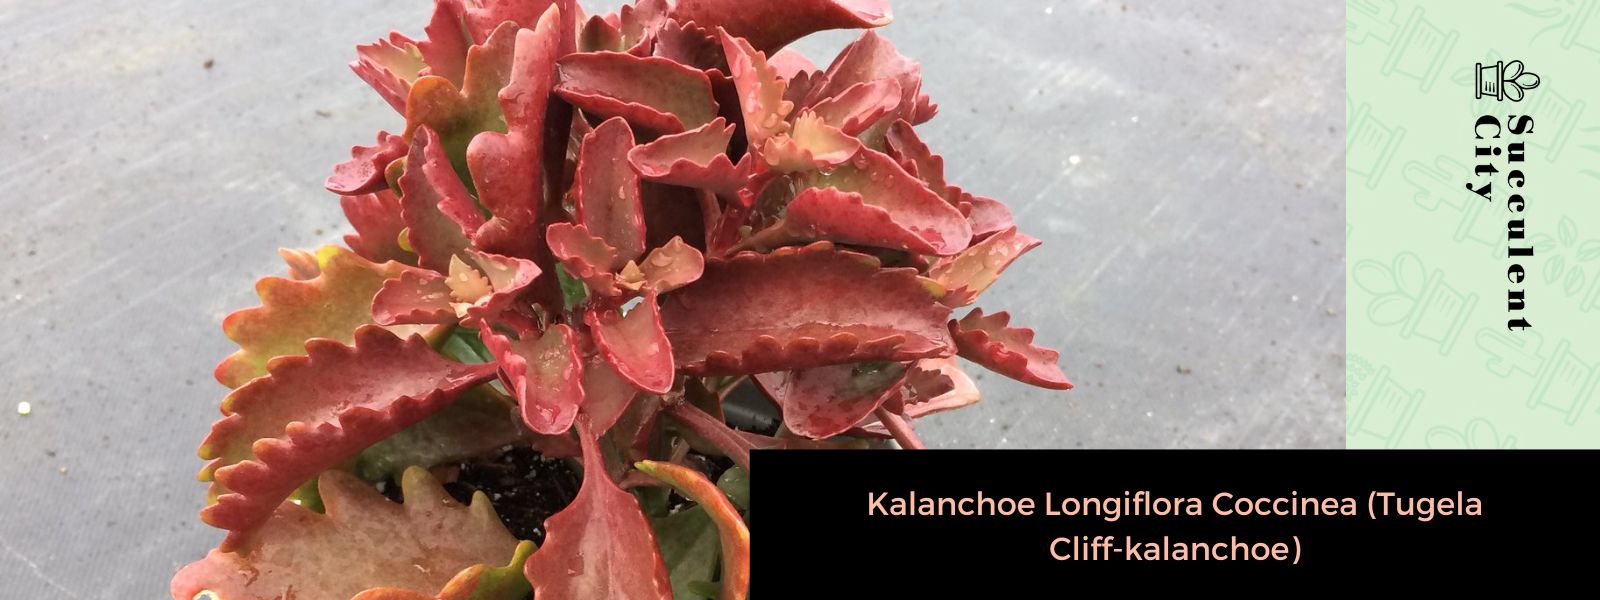 Kalanchoe Longiflora coccinea (Tugela Acantilado-Kalanchoe)